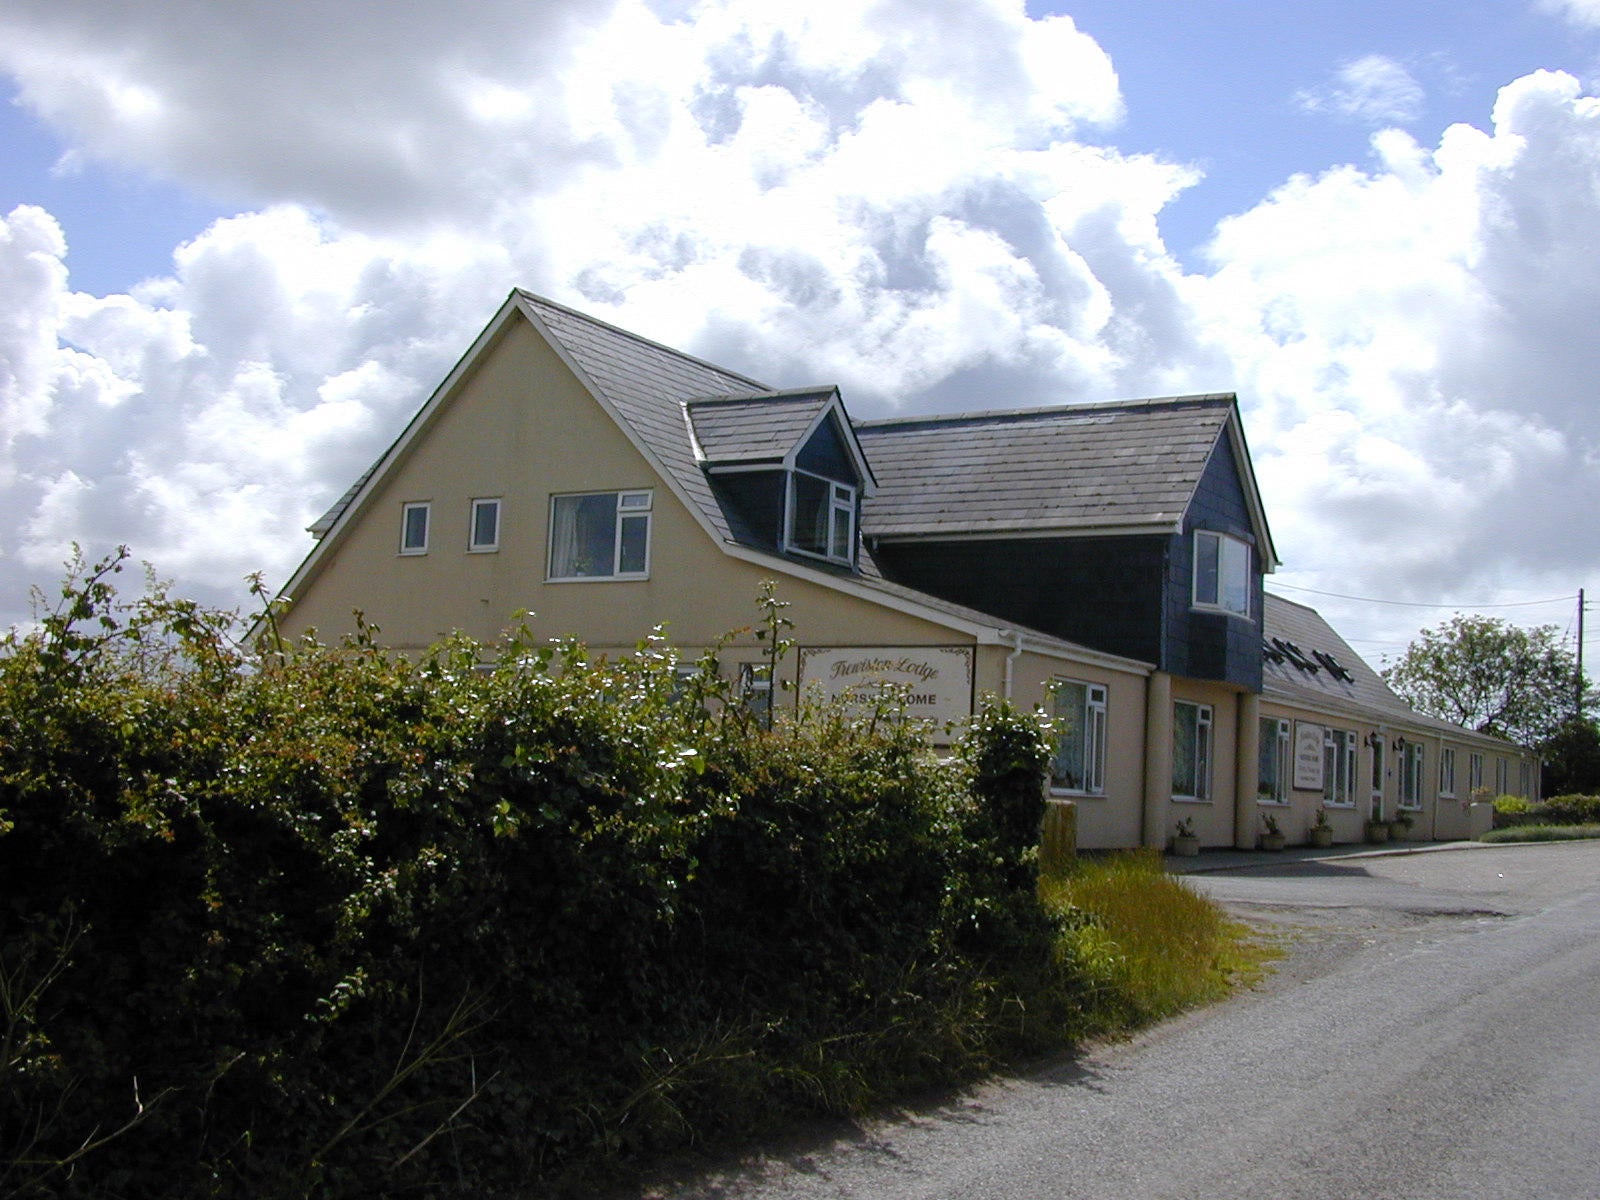 Trewiston Lodge Nursing Home in Cornwall